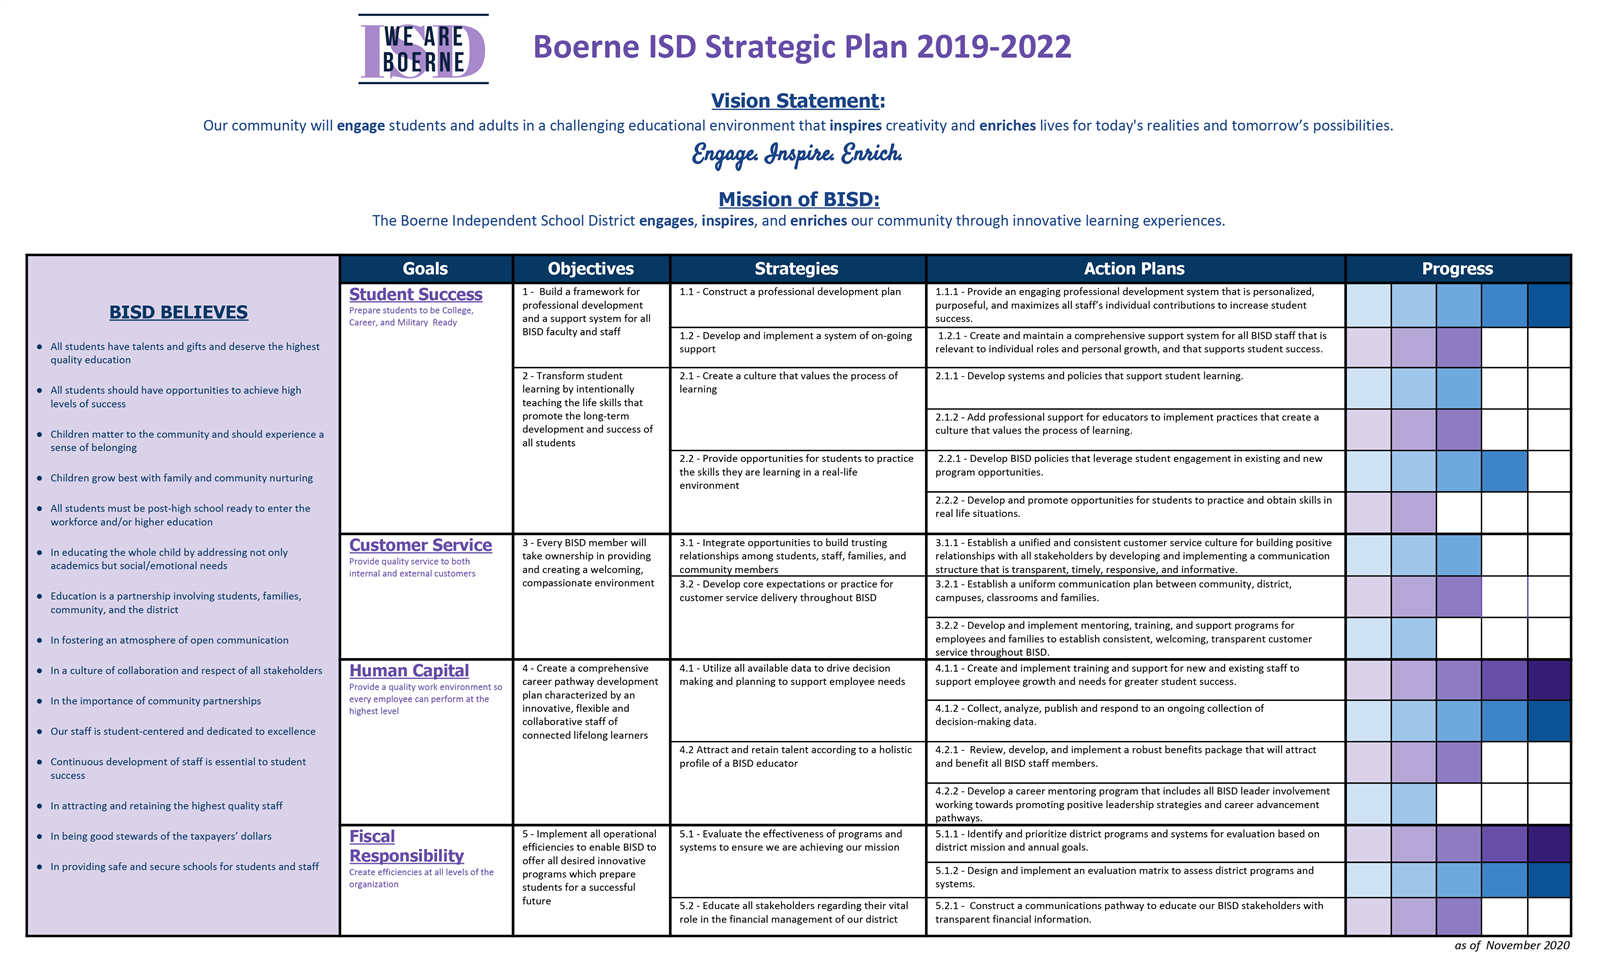 BISD Strategic Plan Year One Progress 